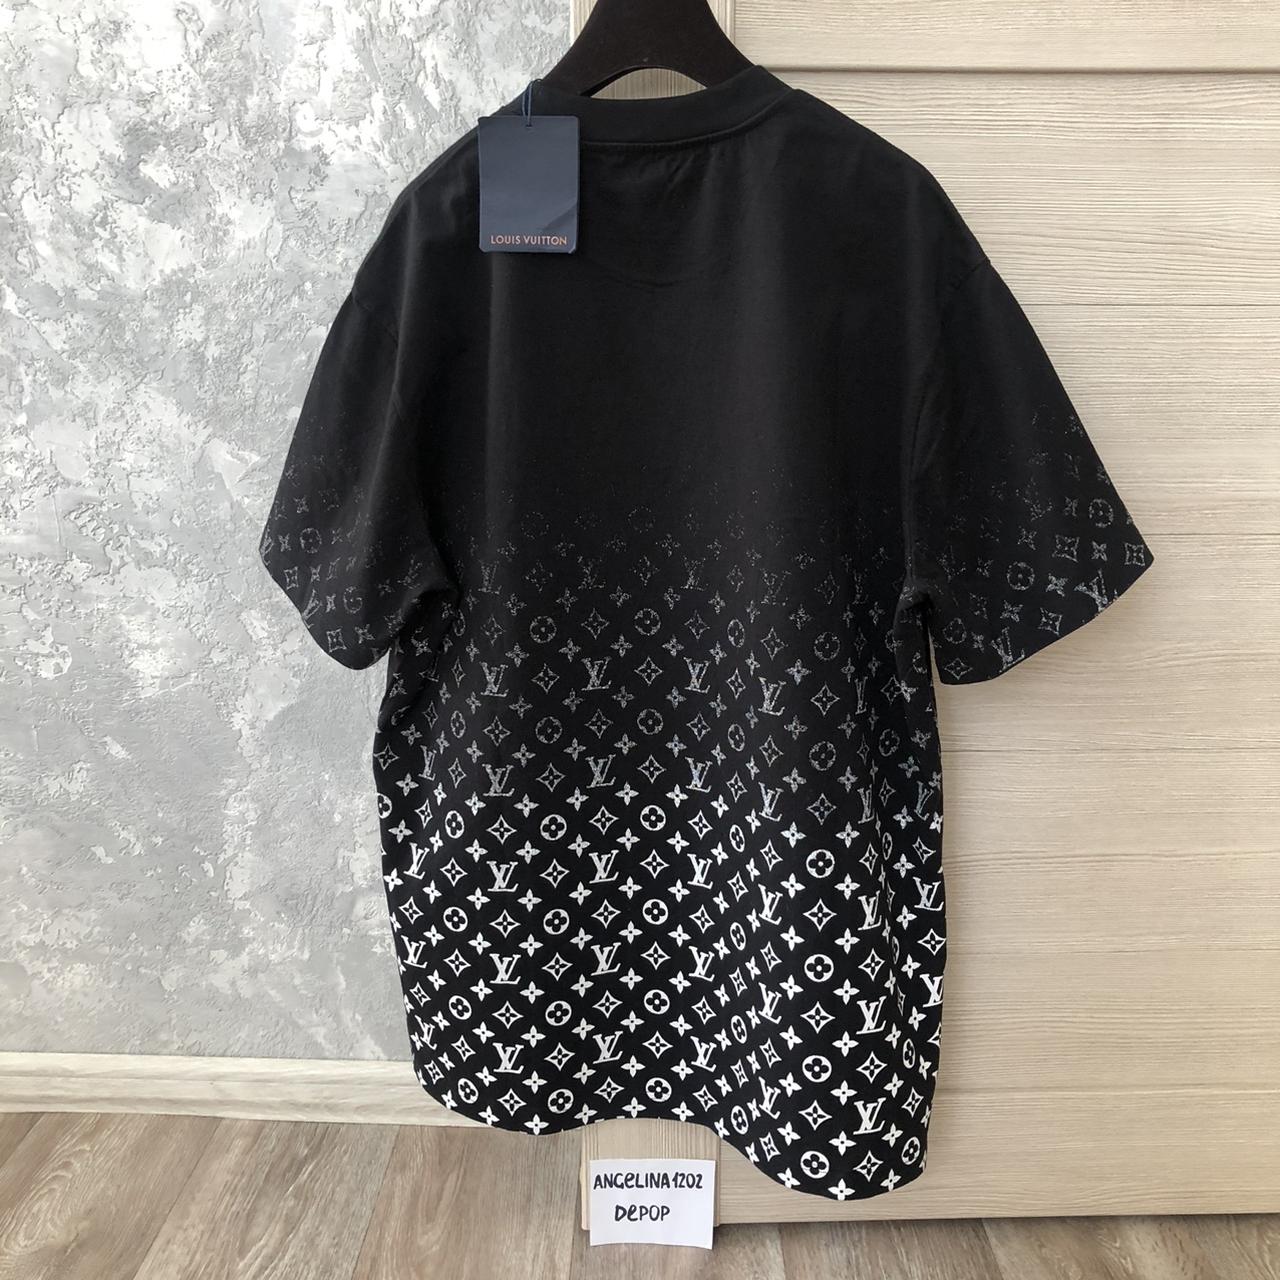 Louis Vuitton LV Monogram Gradient Black White T Shirt - M / Black